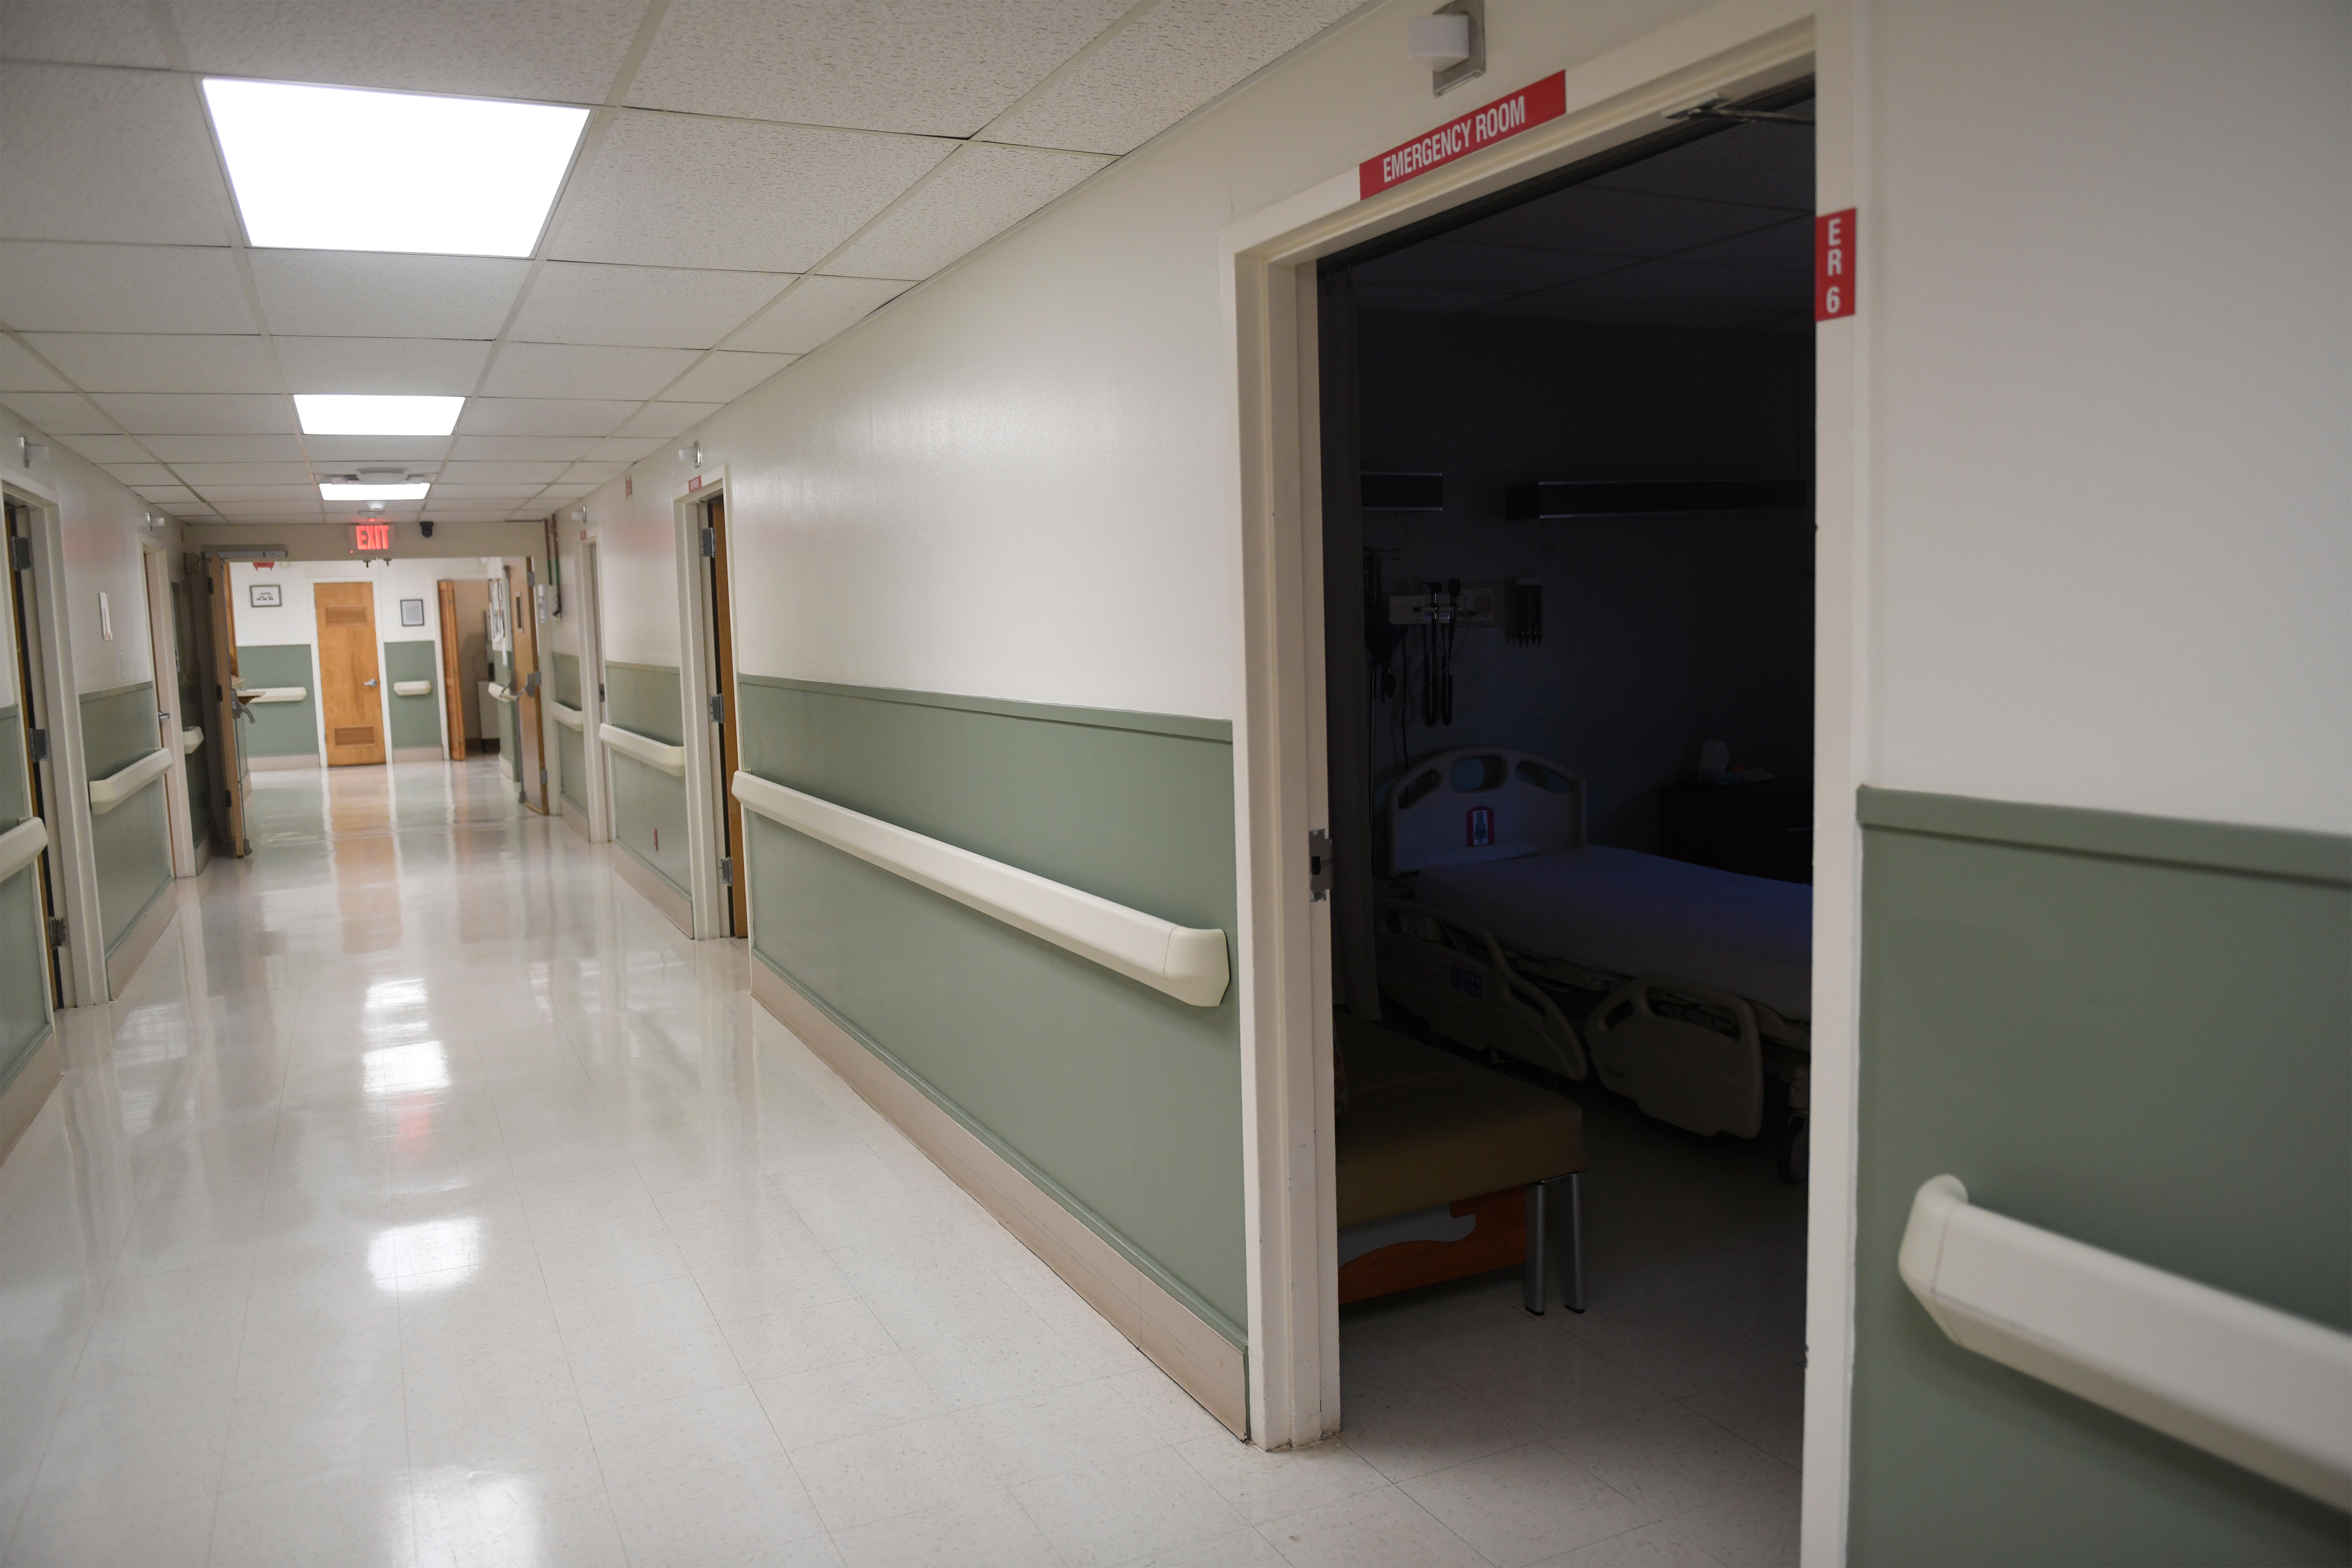 A photo shows a hallway inside Crosbyton Clinic Hospital.